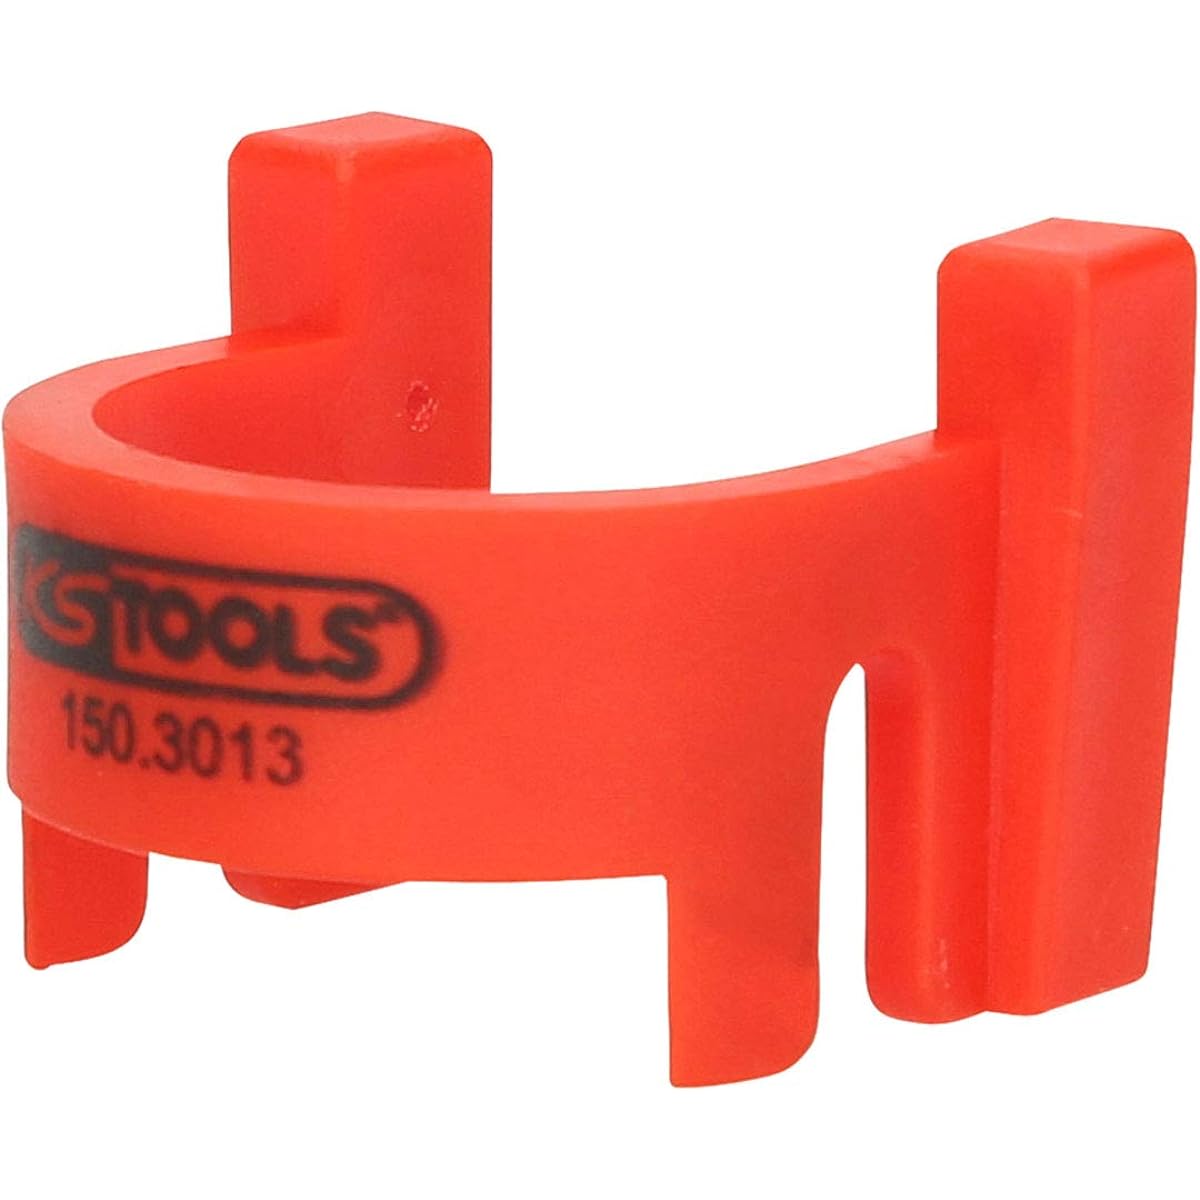 KS Tools Heating Hose Unlock Tool for Ford 150.3013